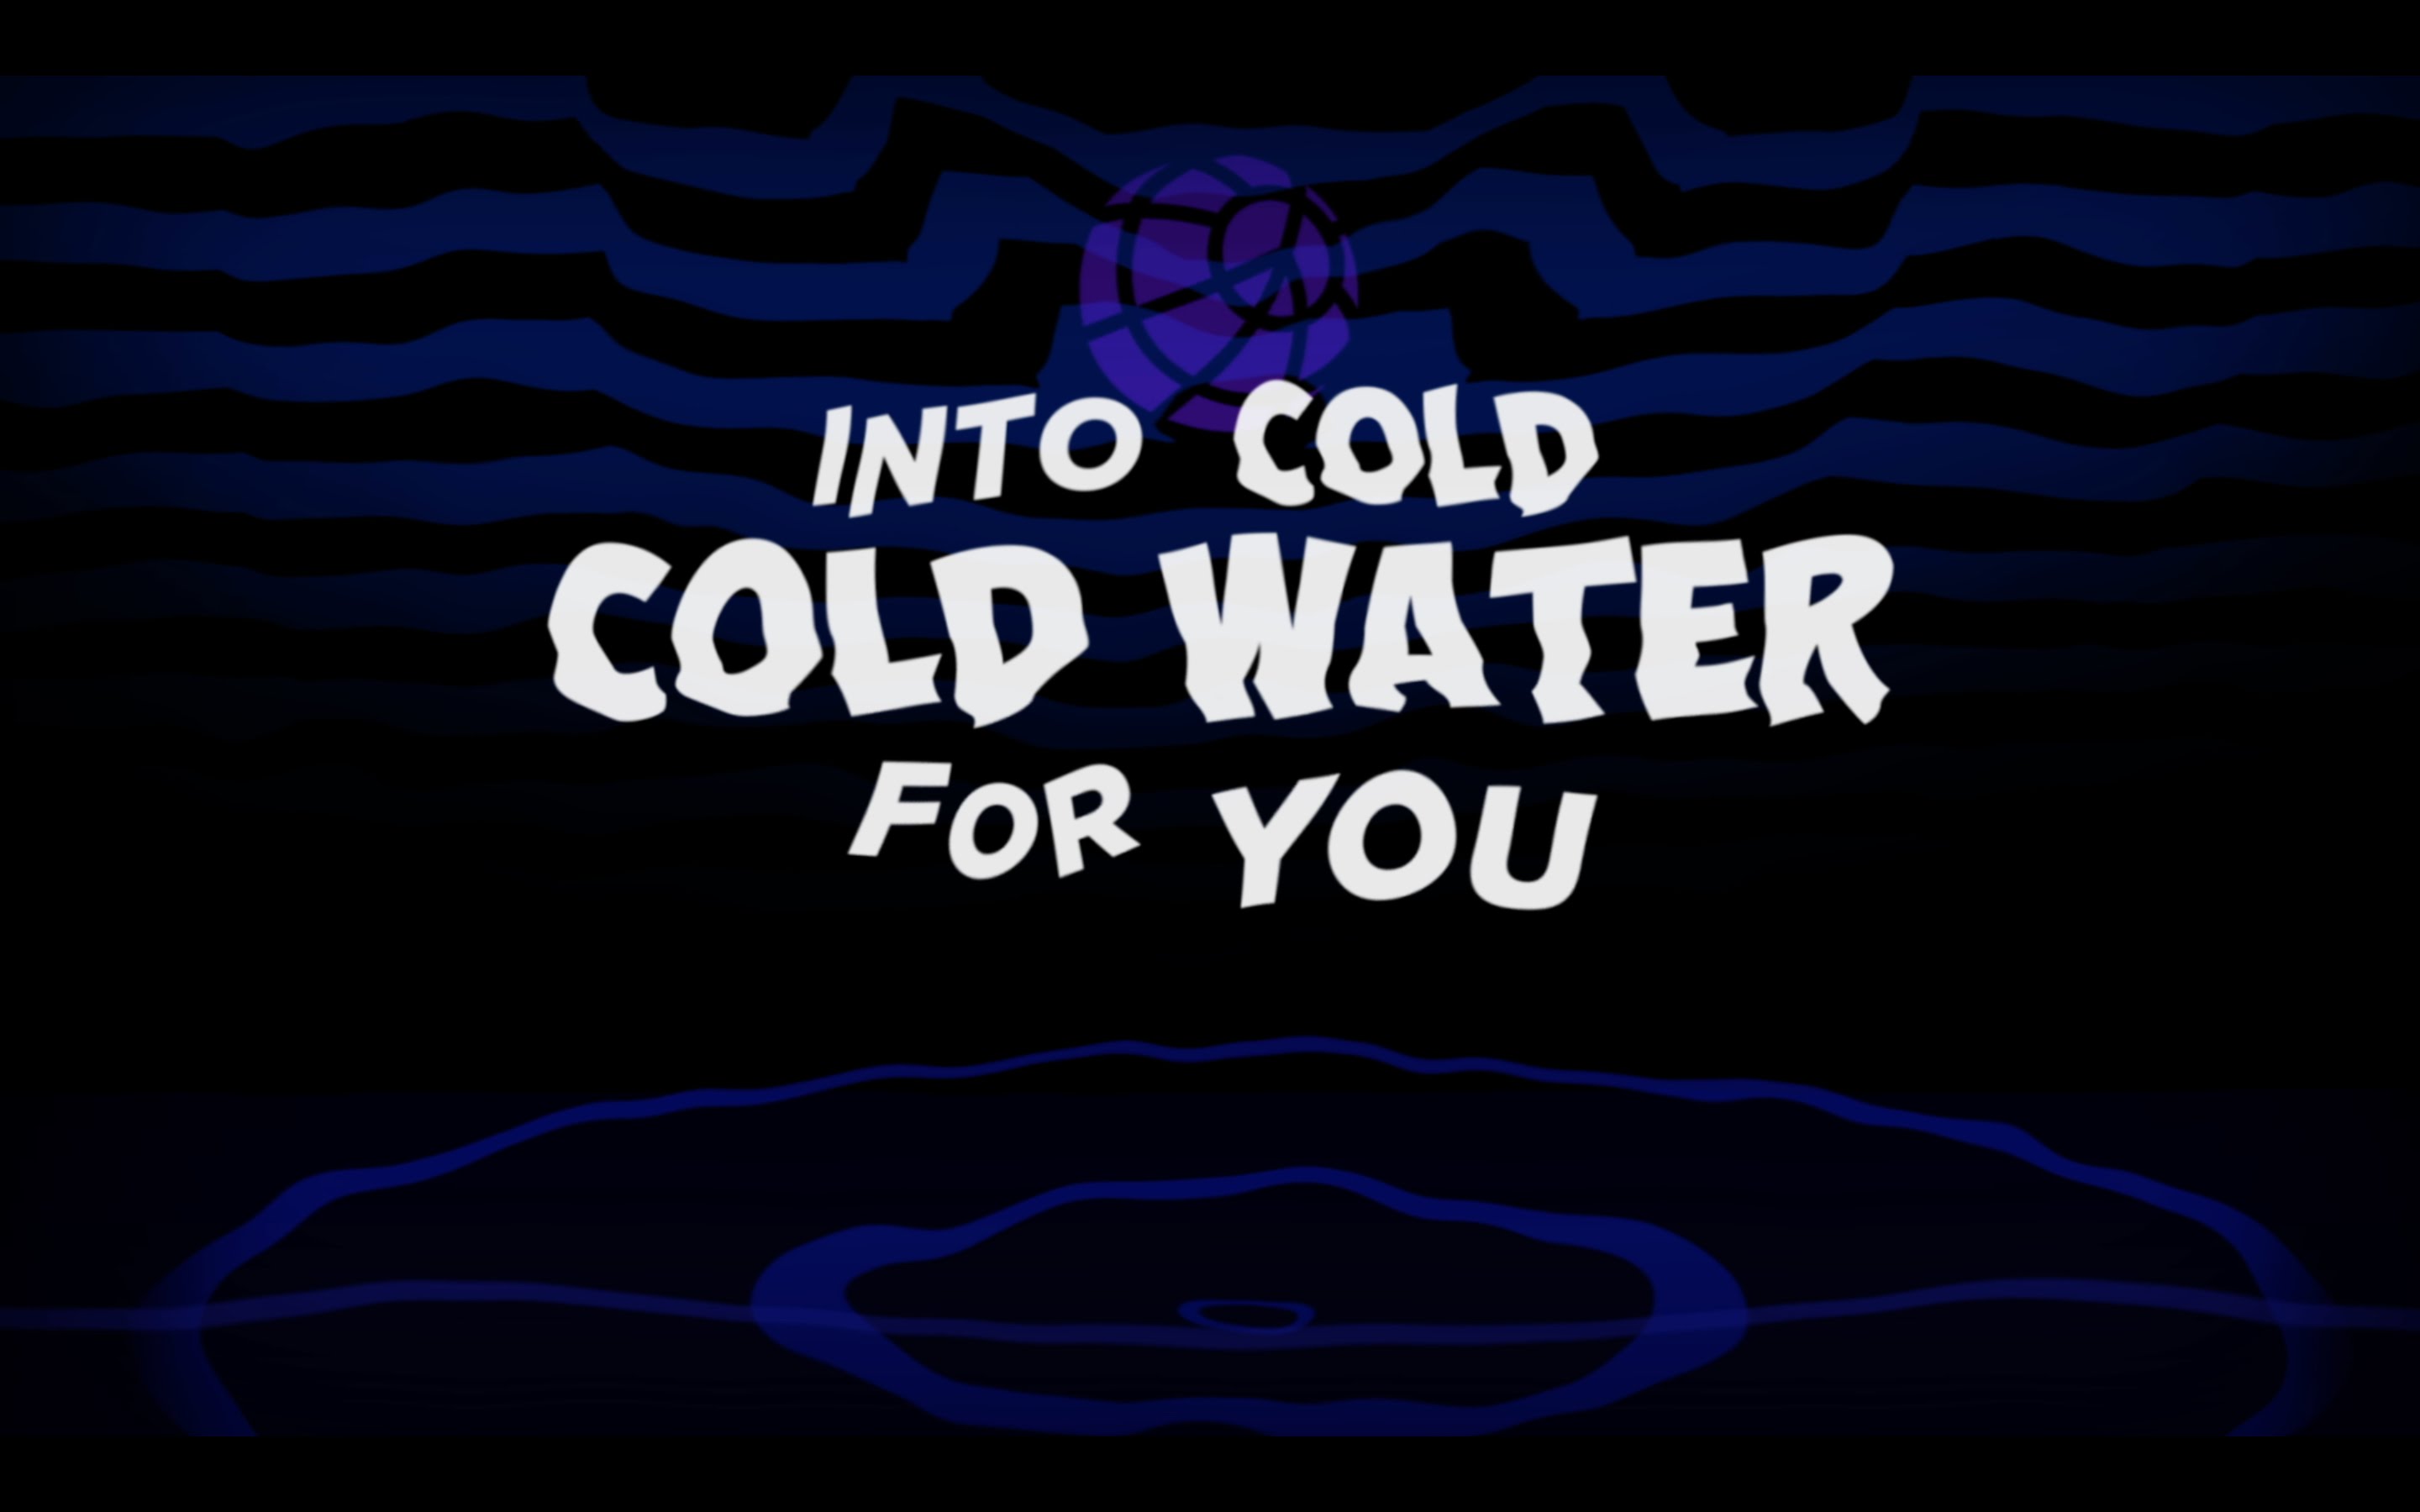 Major Lazer – Cold Water feat. MØ & Justin Bieber